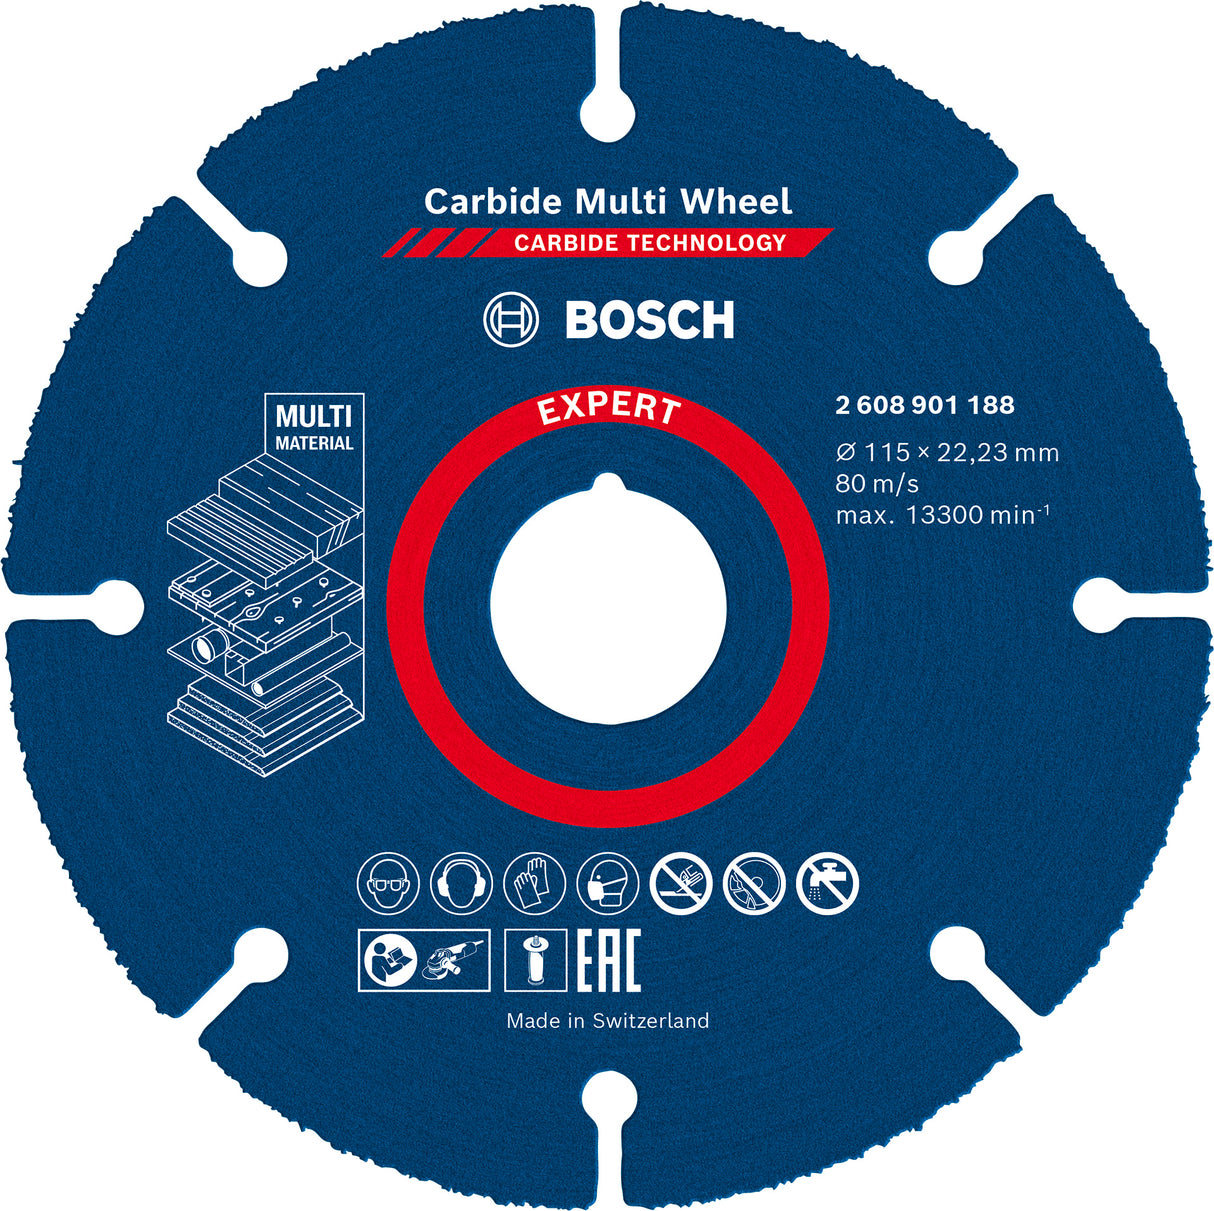 Bosch Professional Expert Carbide Multi Wheel Cutting Disc 115 mm, 1 mm, 22.23 mm